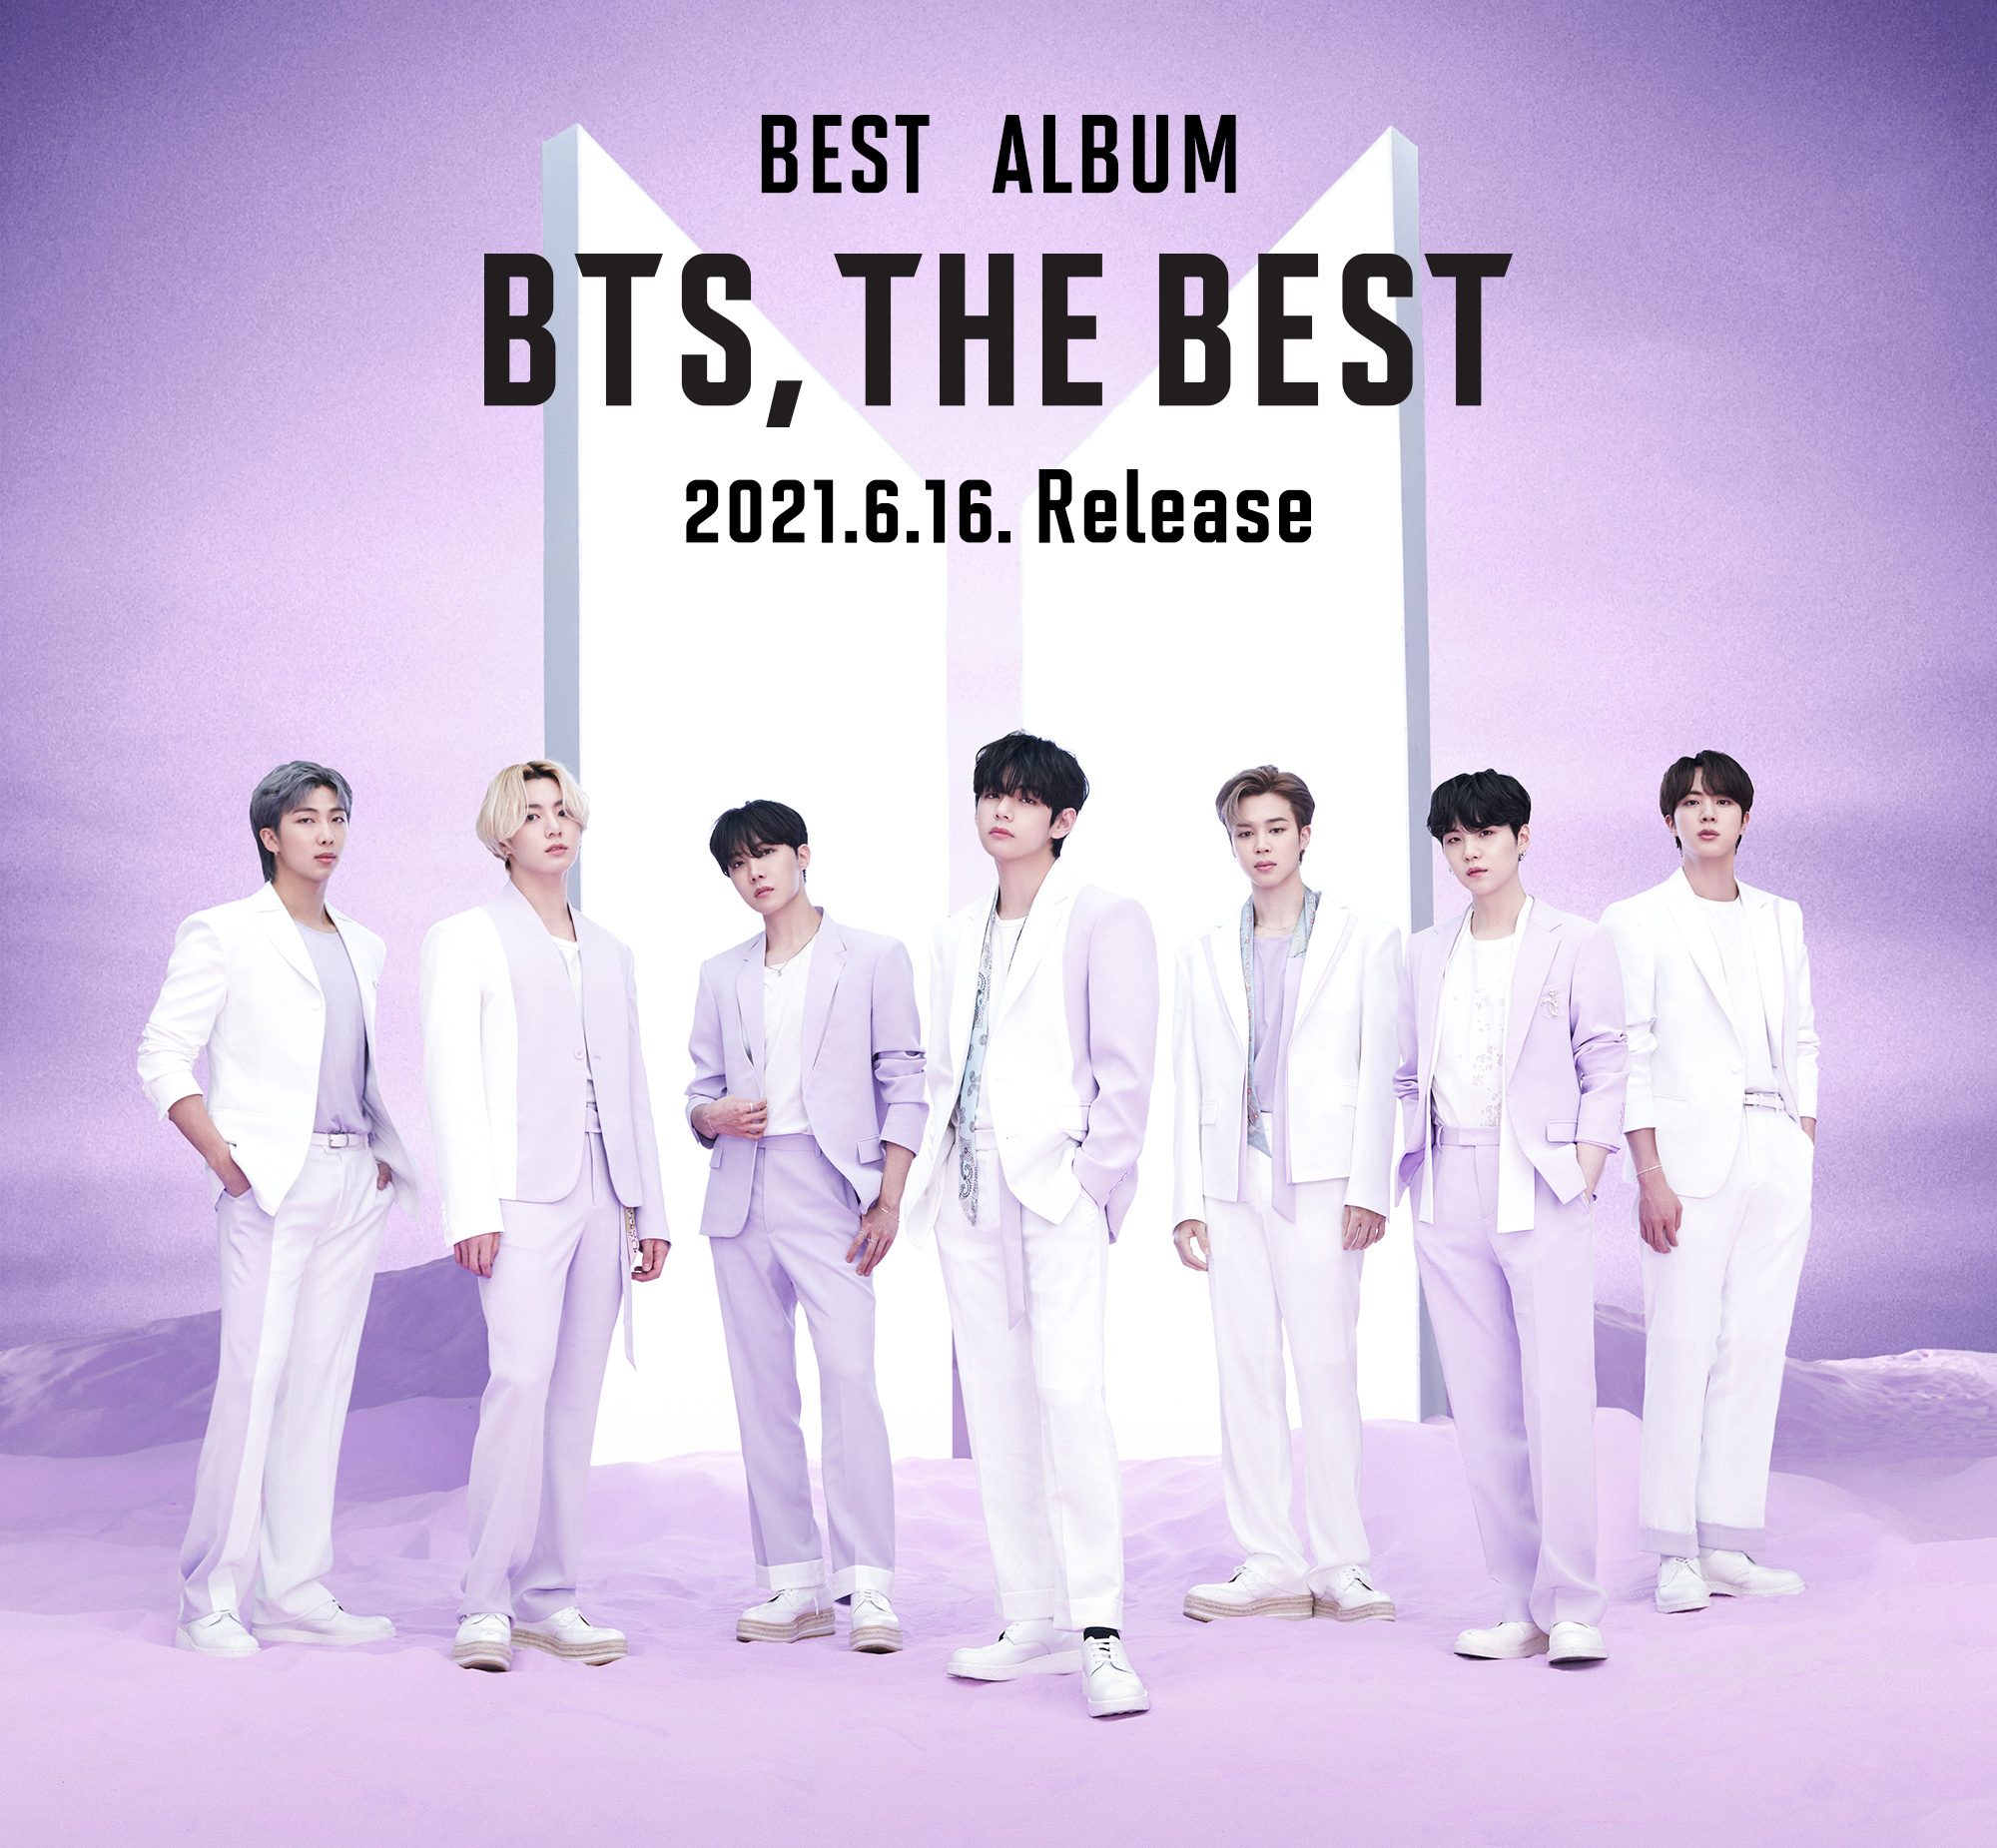 BTS(방탄소년단)ベストアルバム『BTS, THE BEST』 - www.bellagcosmeticos.com.br